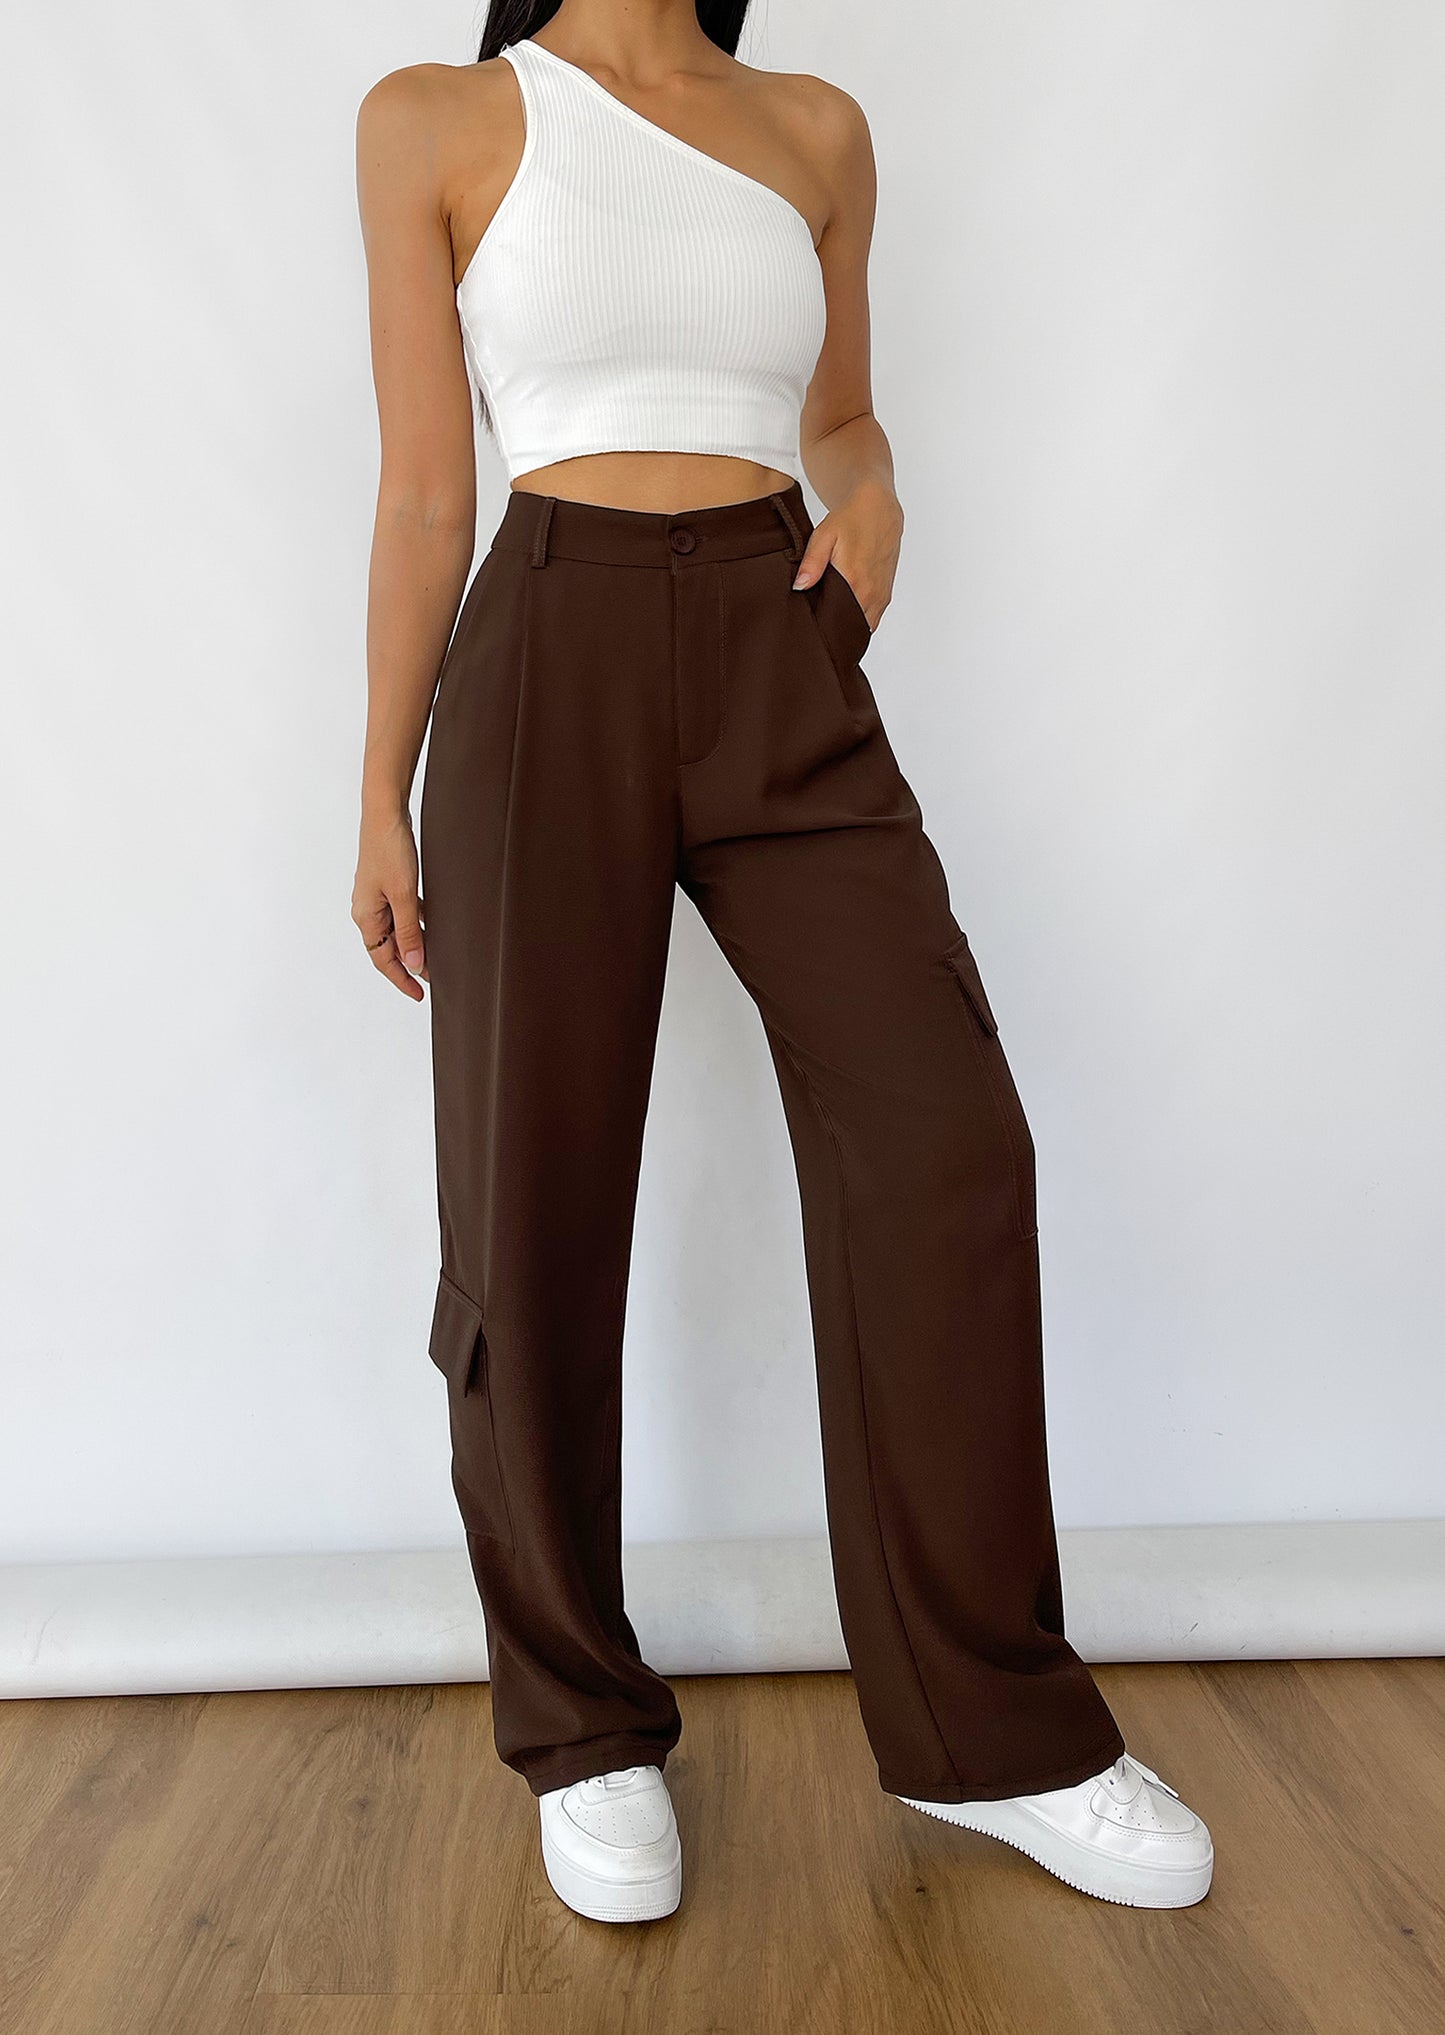 Wide leg cargo pants in brown